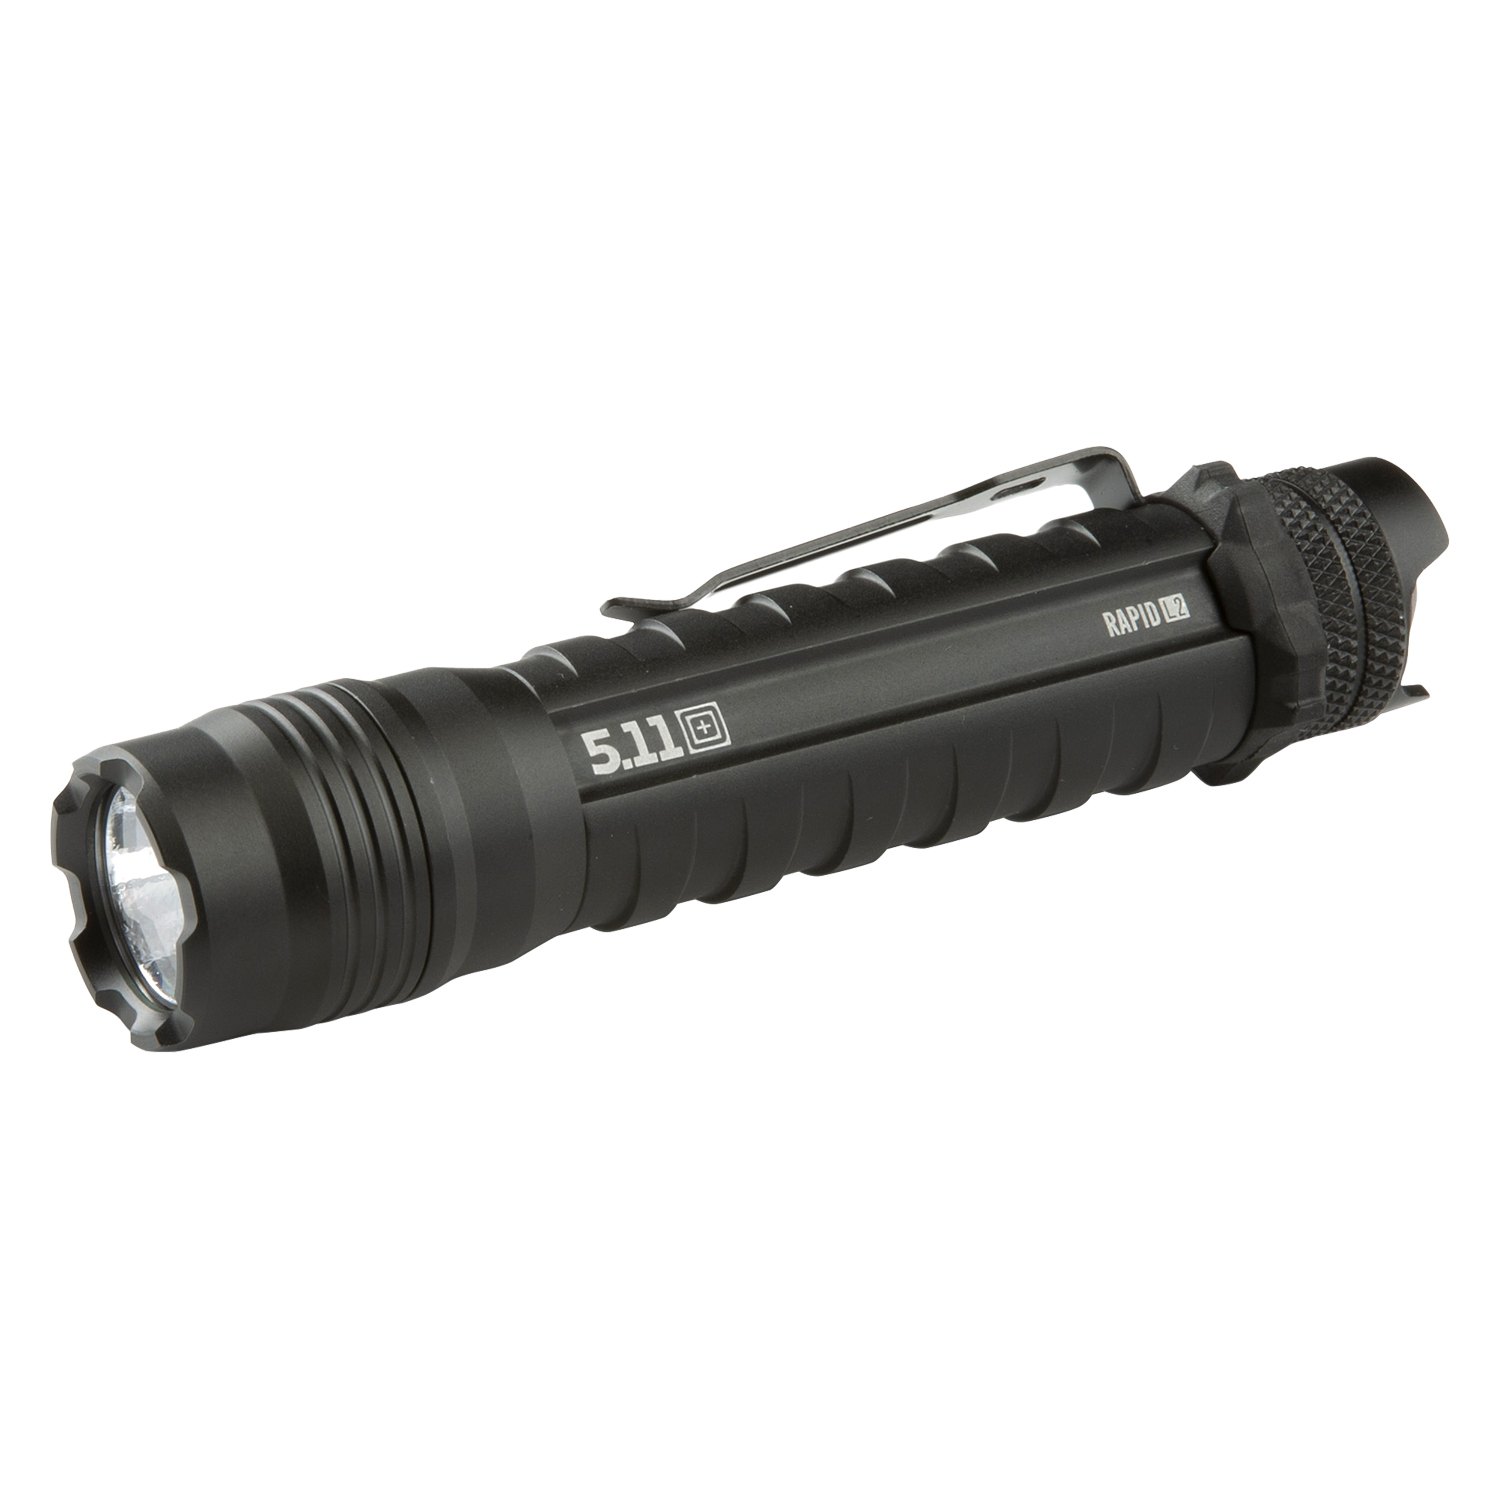 5.11 Tactical Rapid L2 Flashlight Brightness Strobe Torch Black 53391 Batteries 